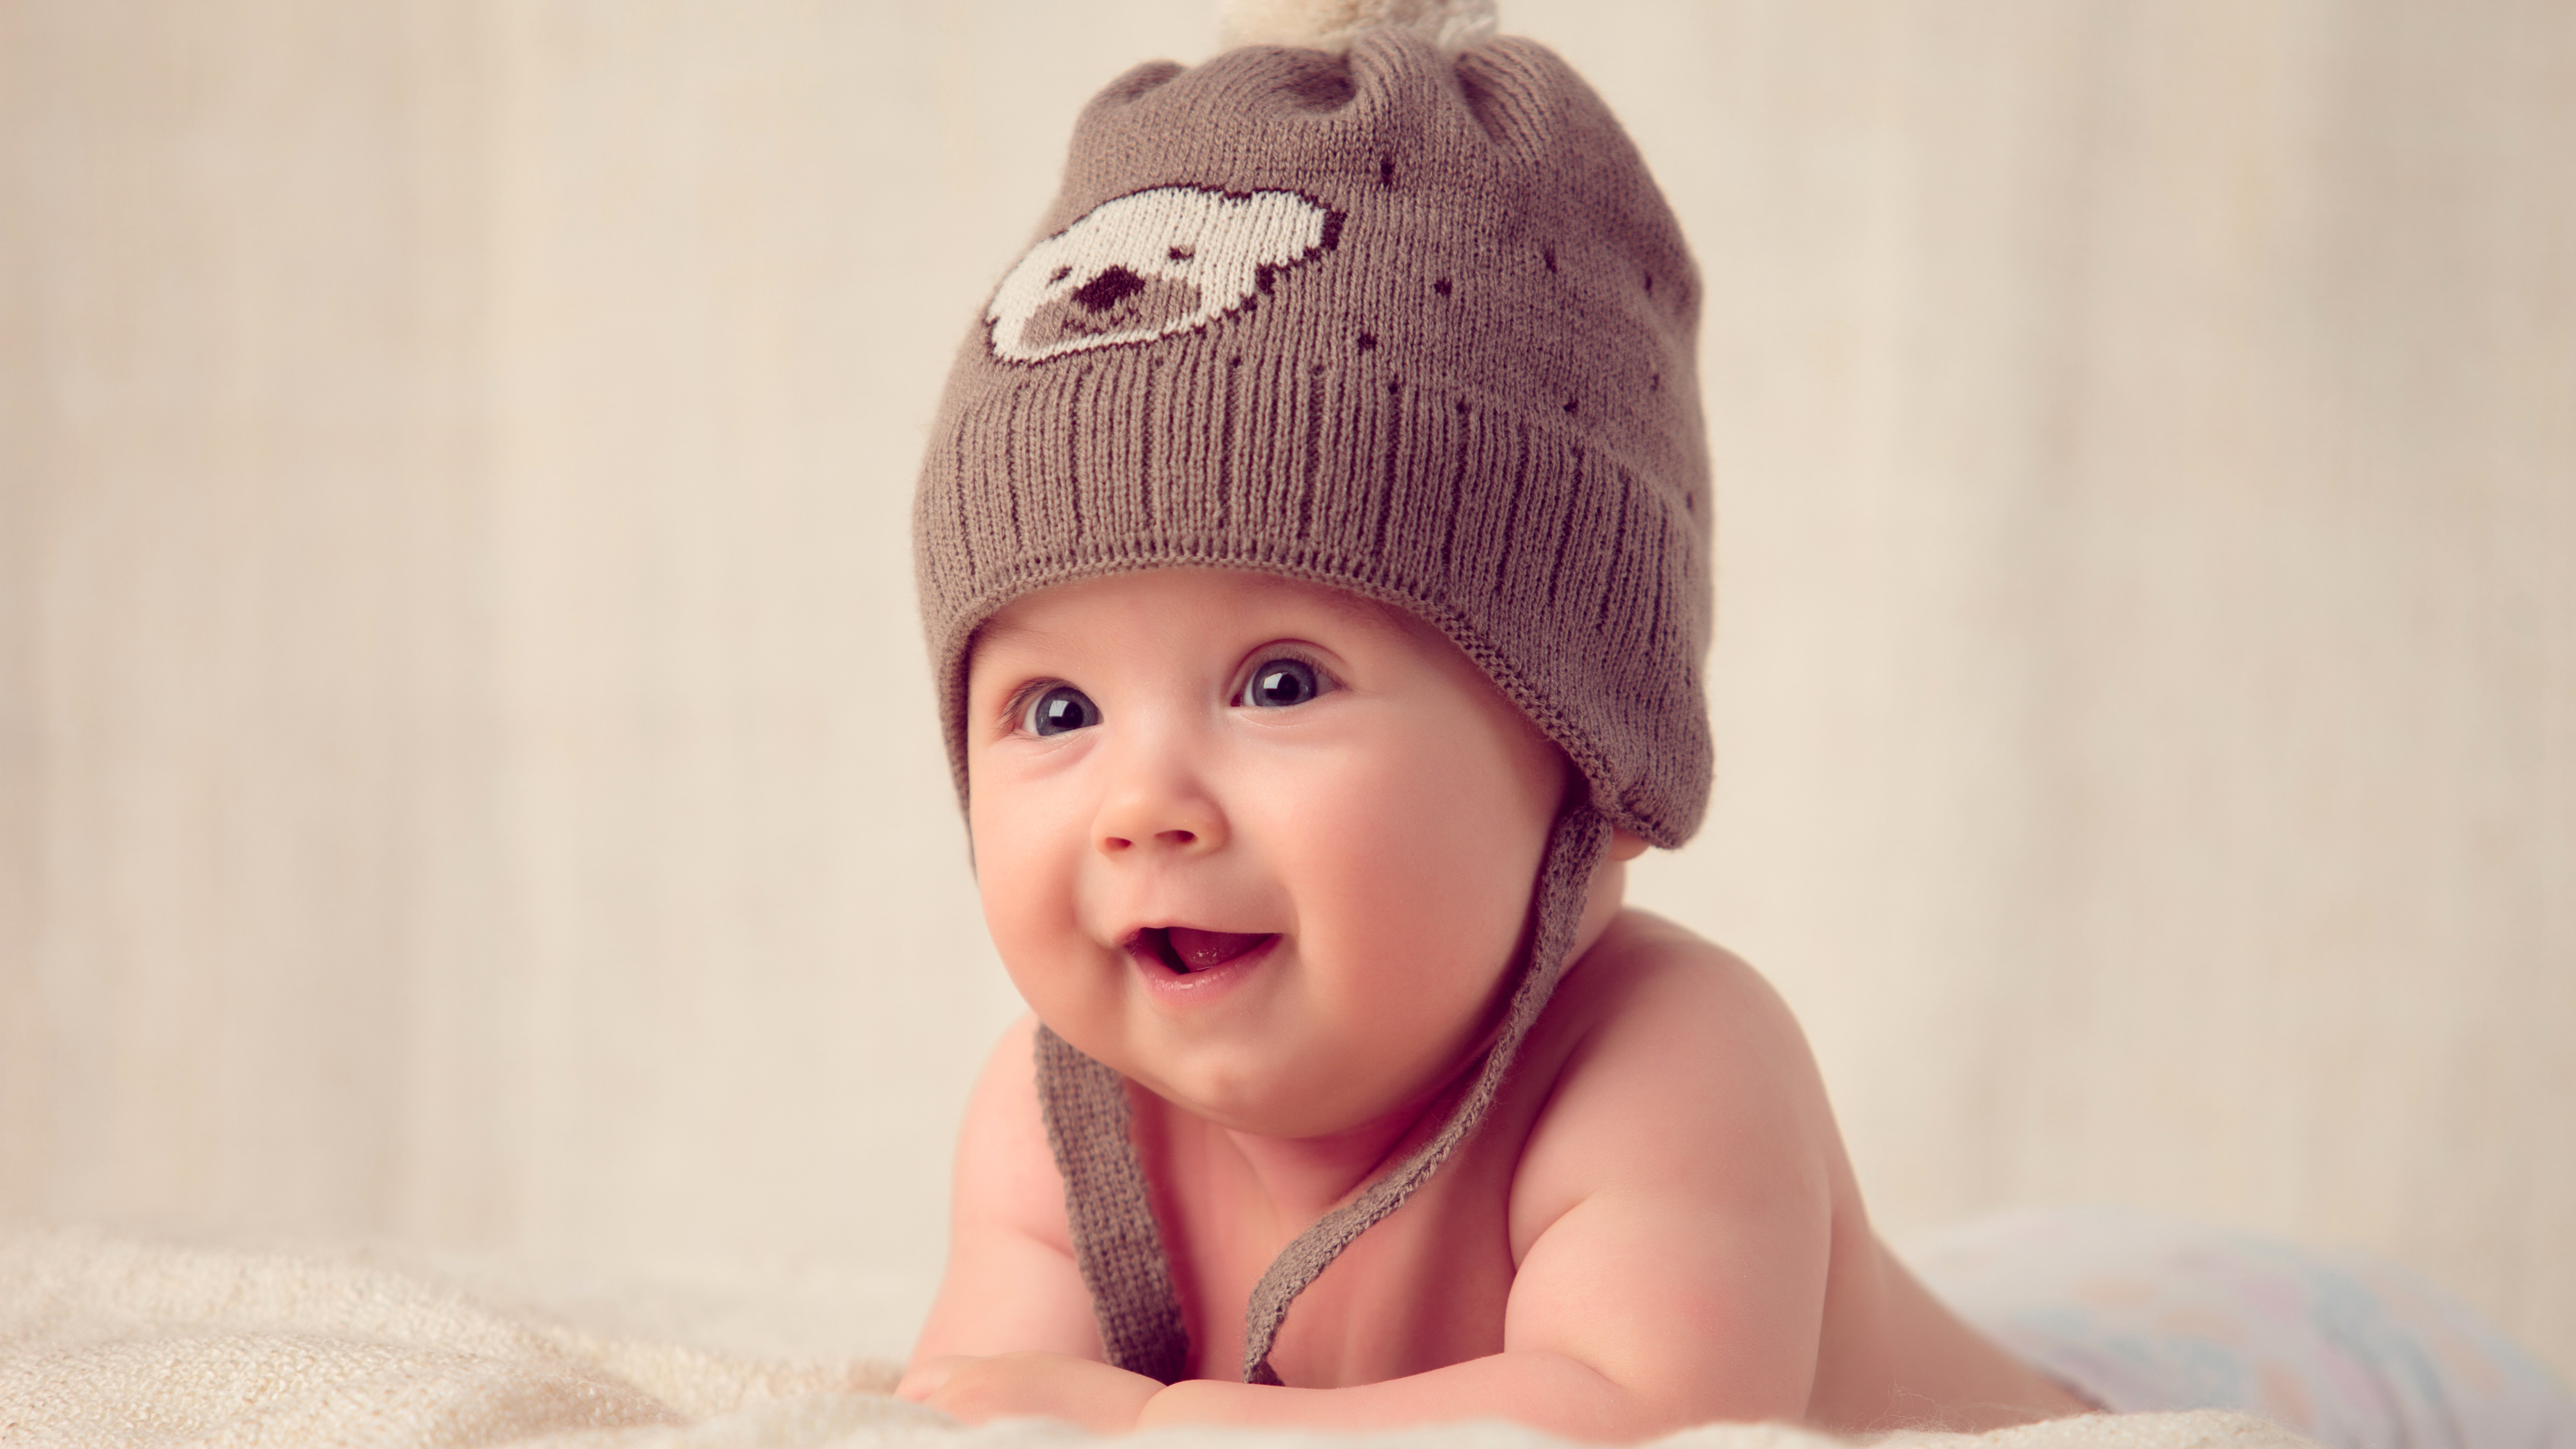 Cute baby image